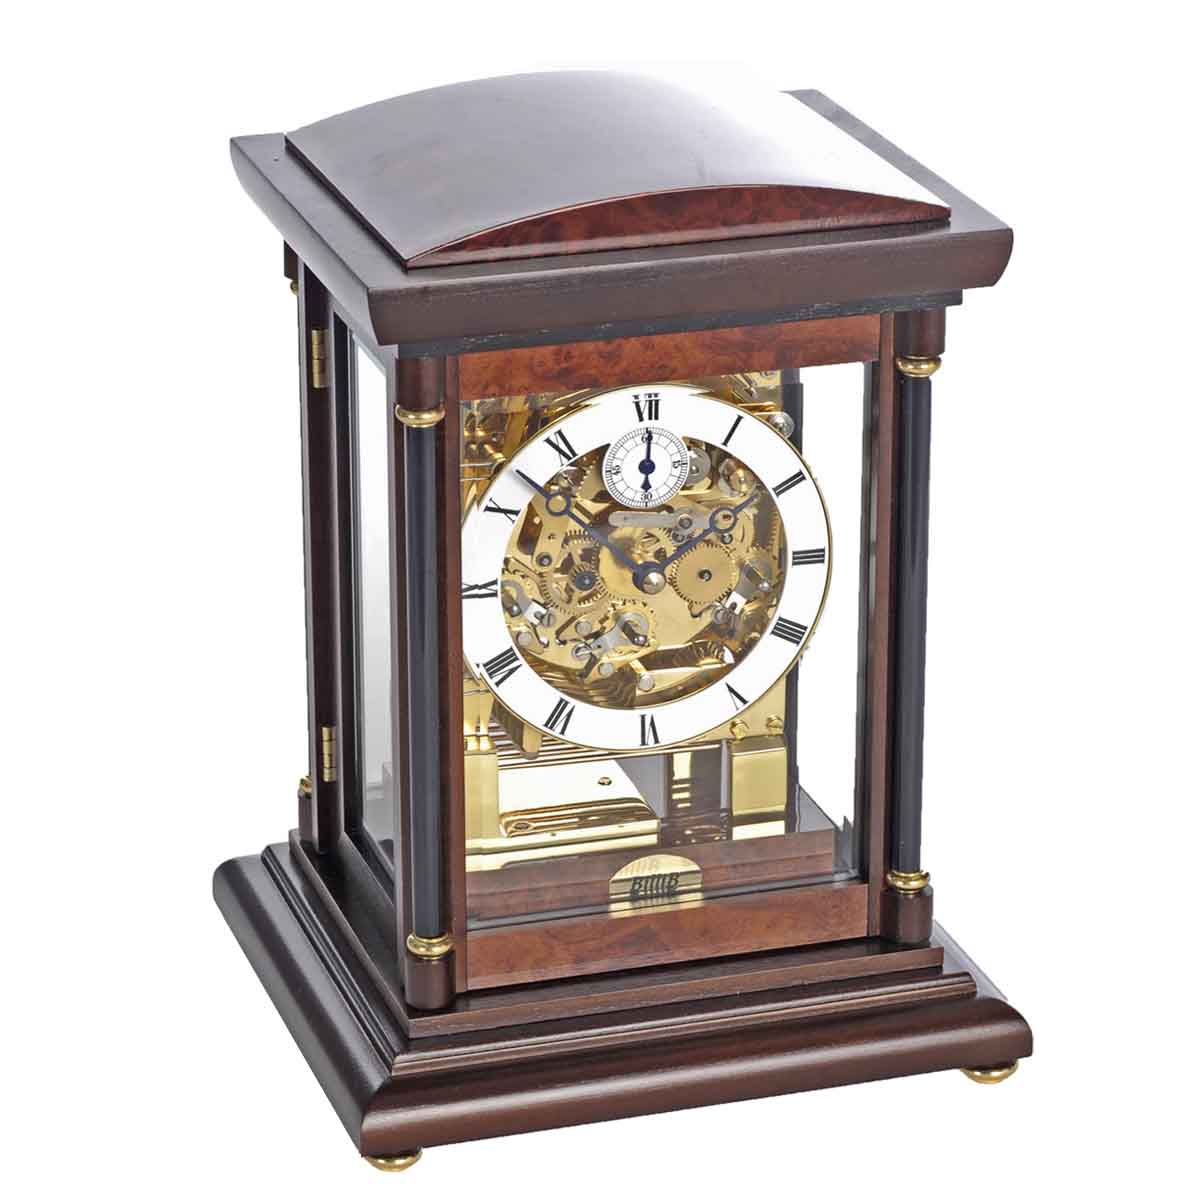 BRADLEY Walnut Finish Mantel Table Clock